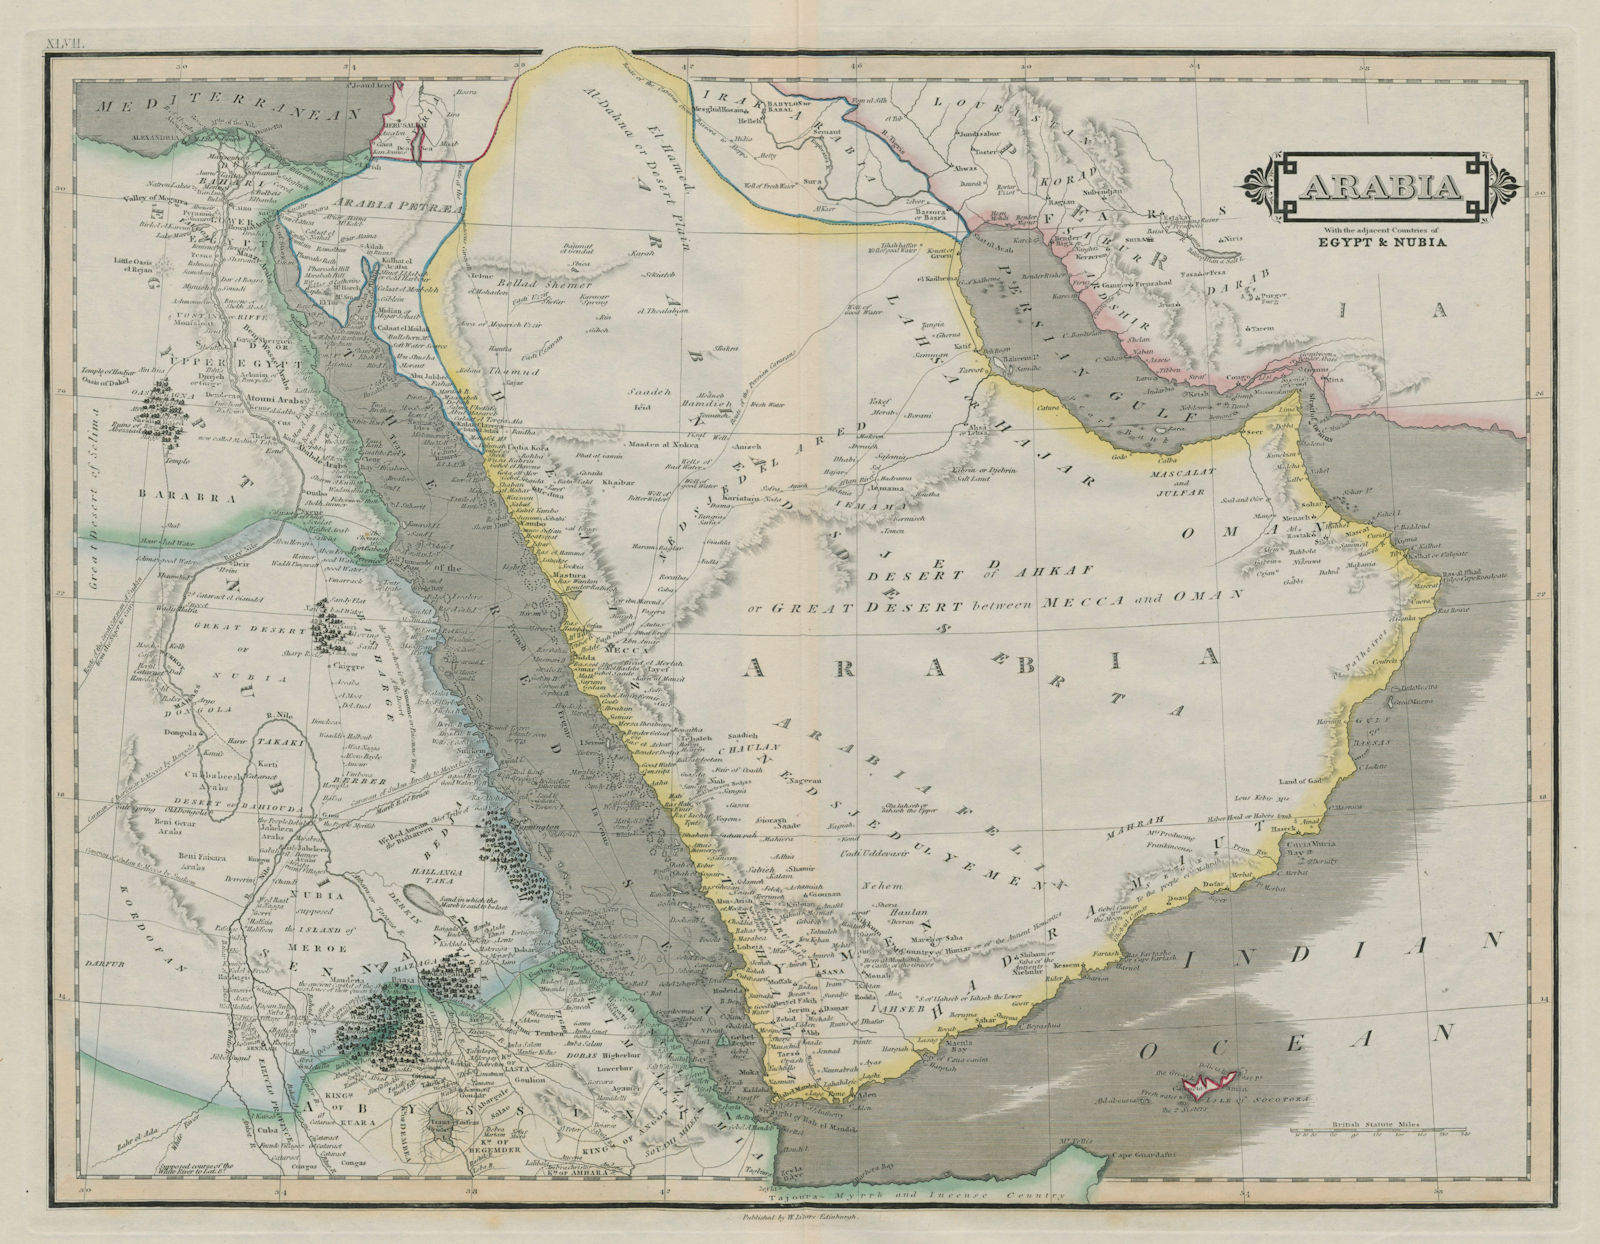 Arabia, Egypt & Nubia. "Koueit or Groen" (Kuwait), Bahrein. LIZARS 1842 map